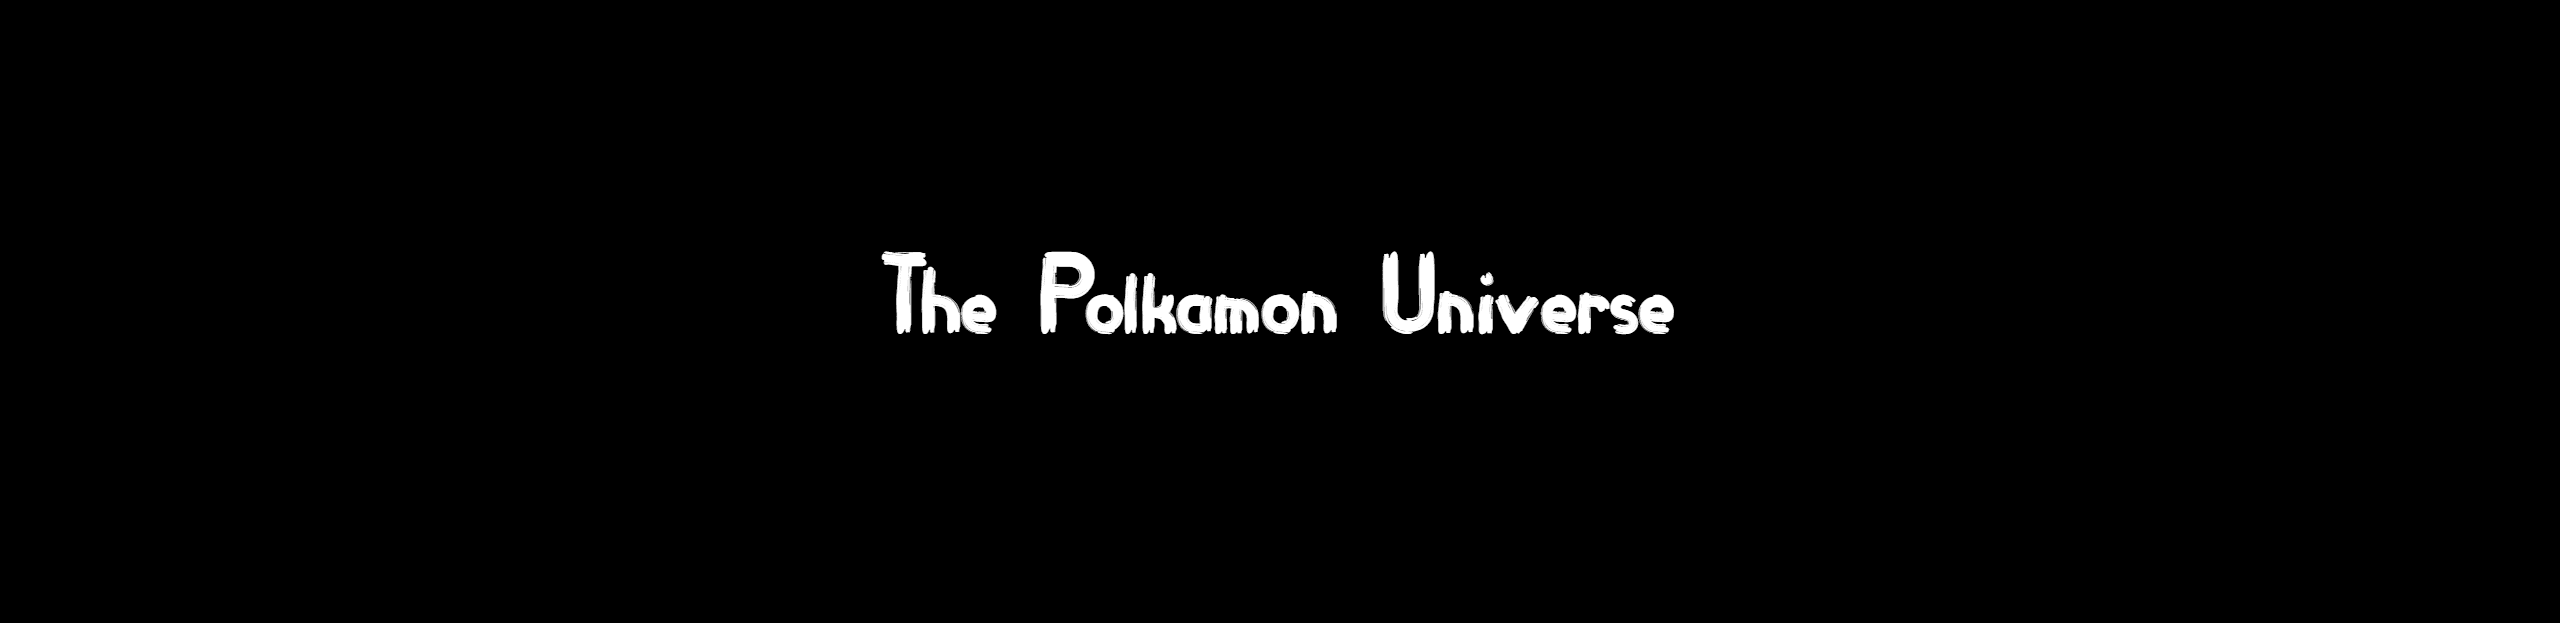 PolkamonUniverse banner